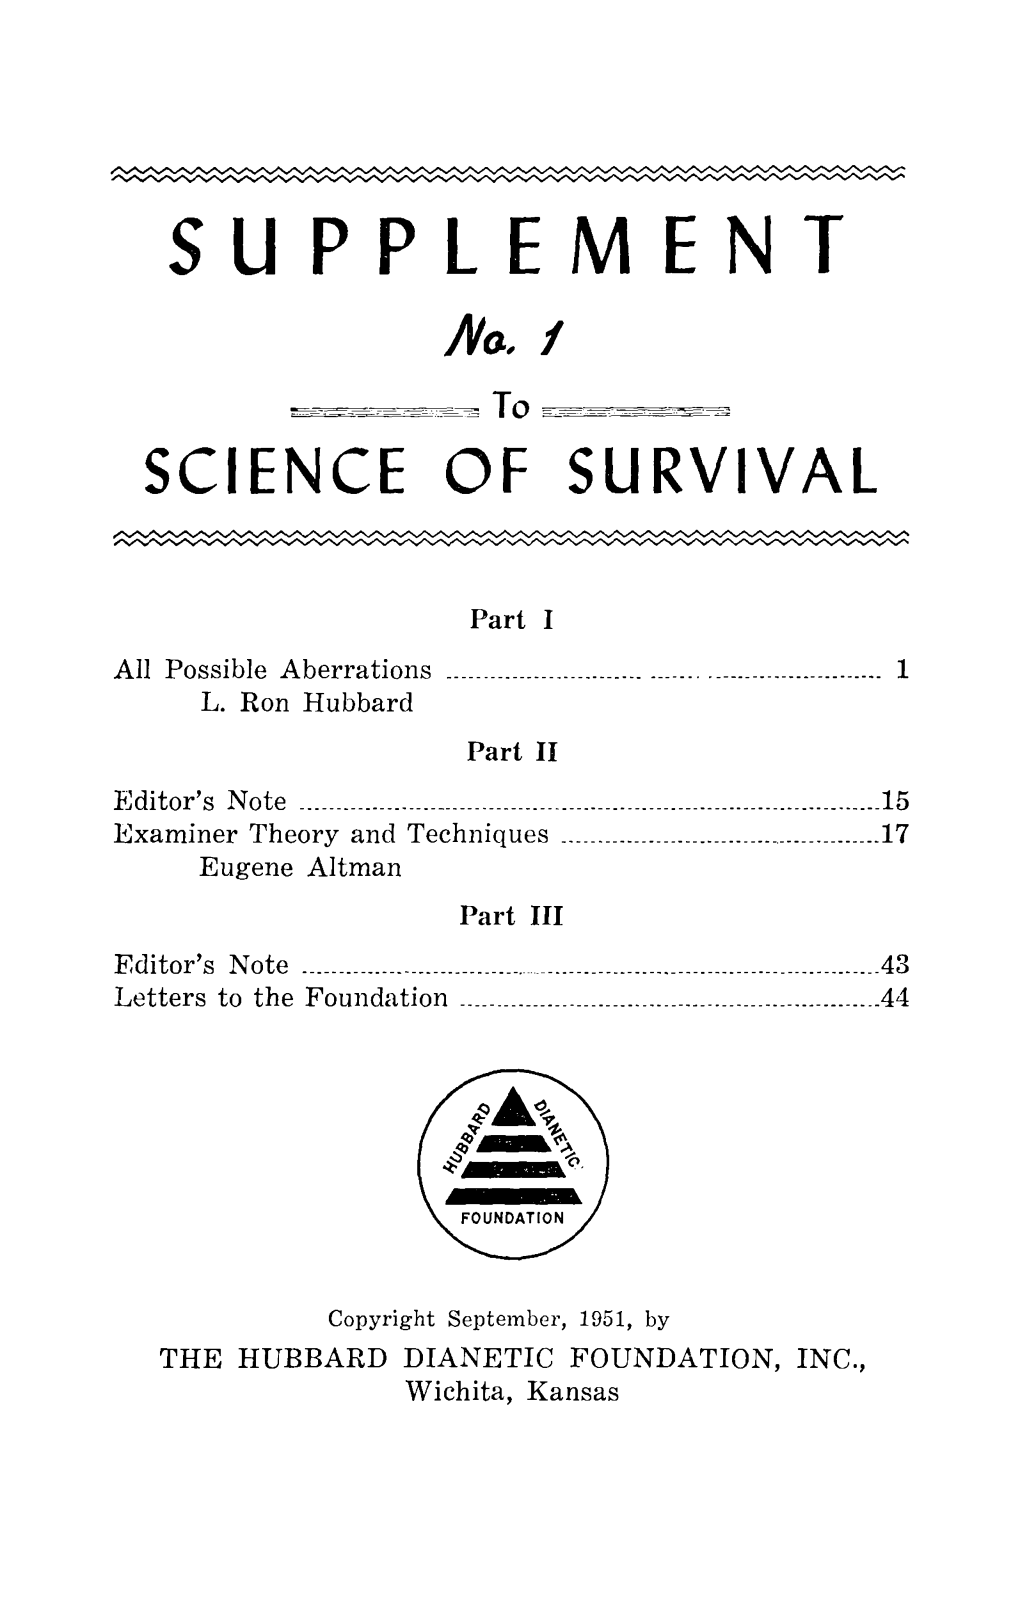 Science of Survival